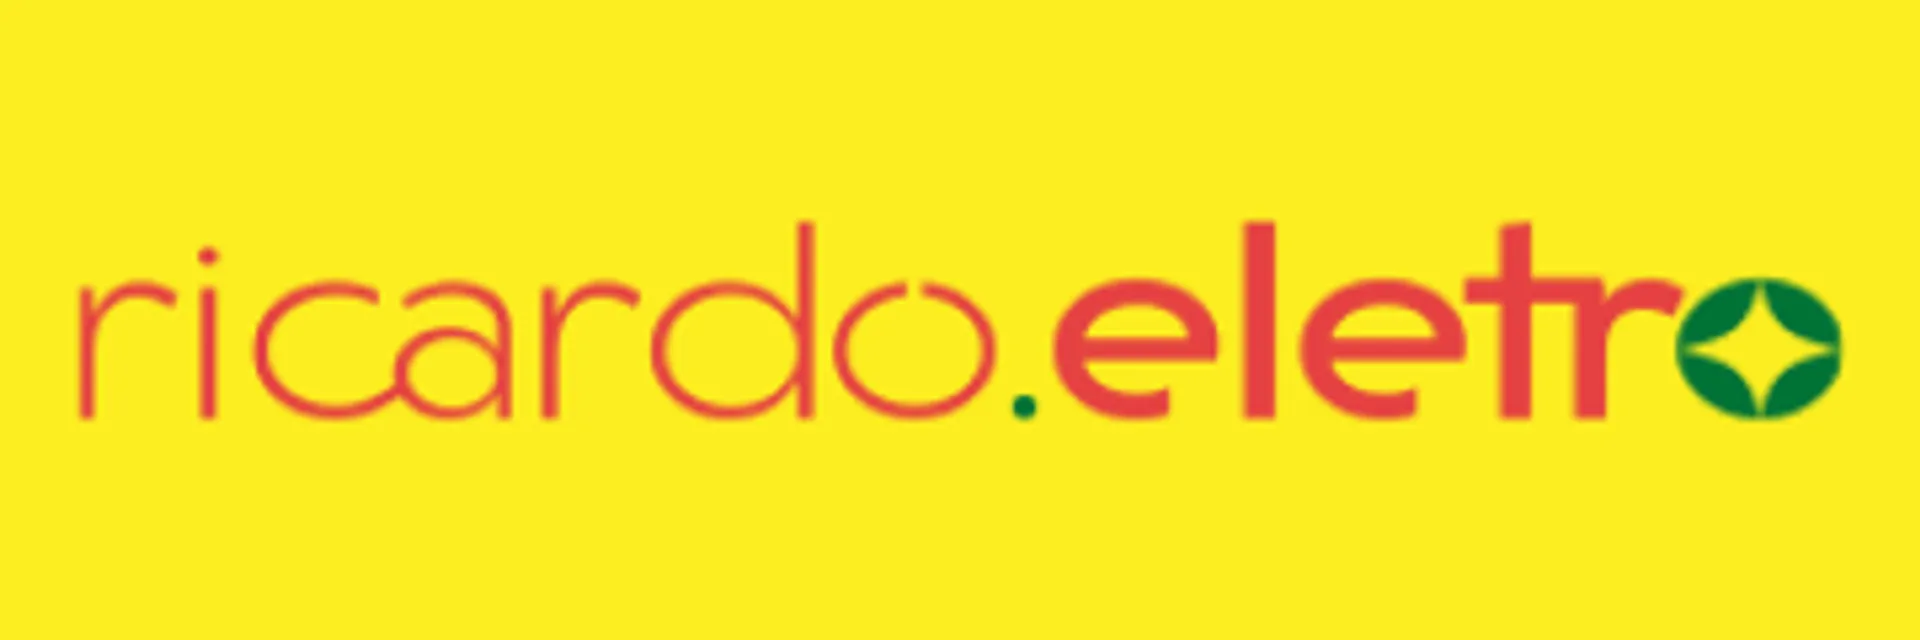 RICARDO ELETRO logo